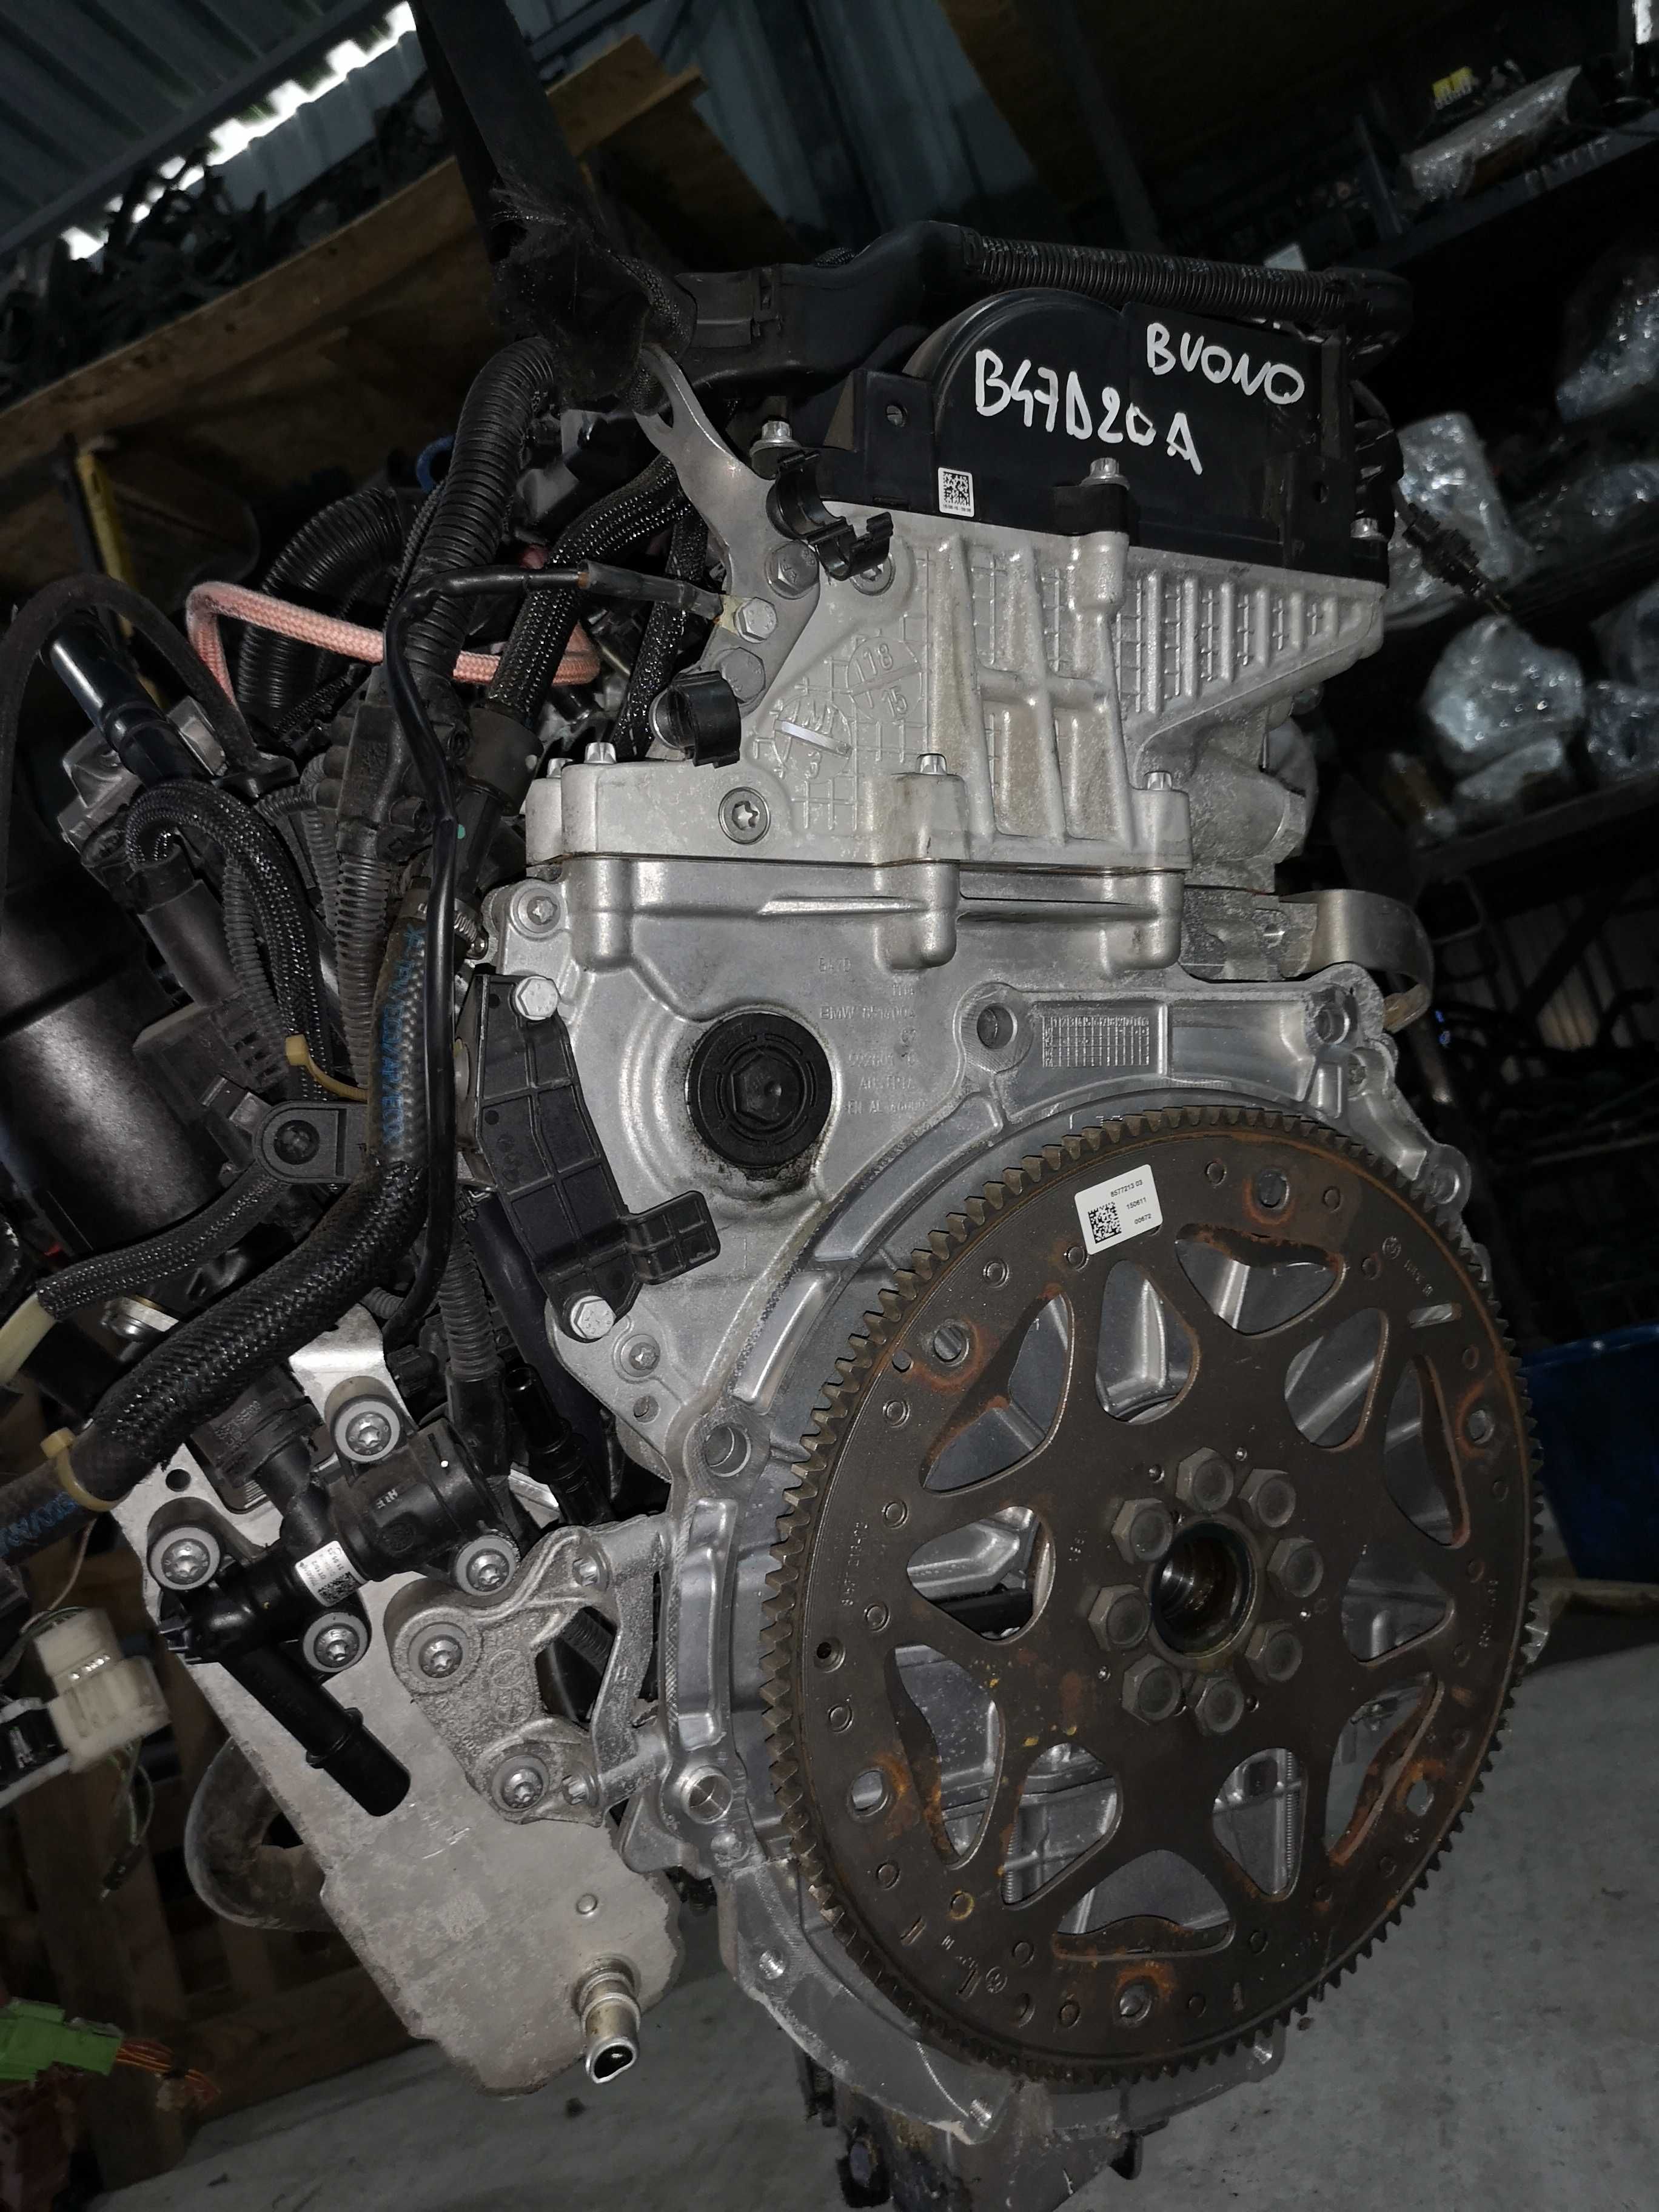 Motor Bmw 2.0 d Euro 6 cod B47d20a